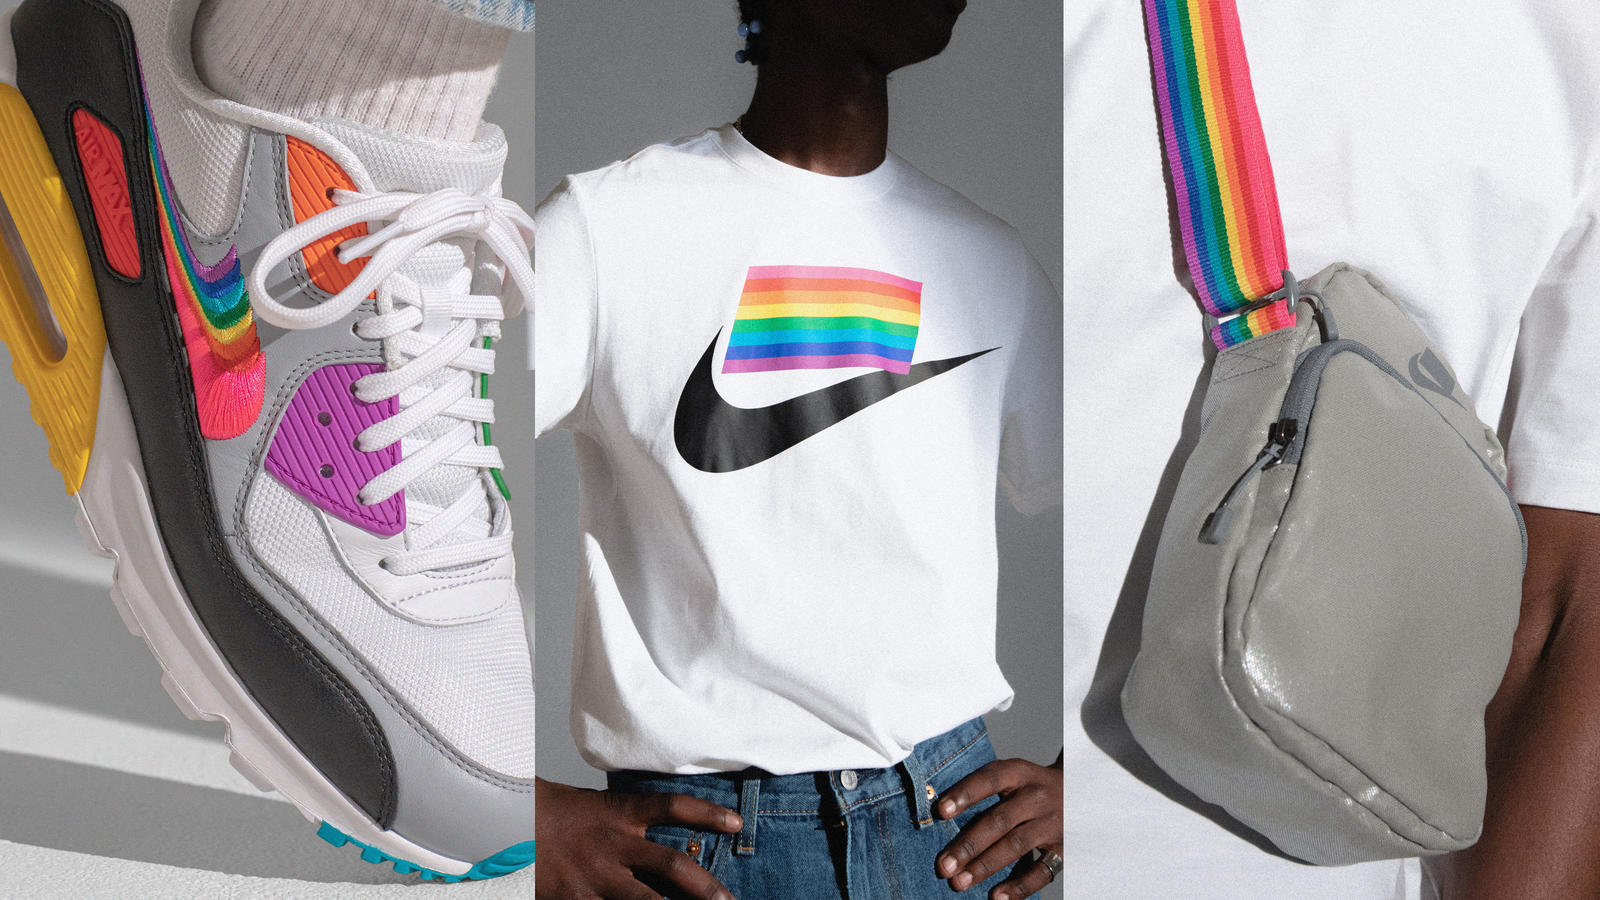 nautica brand gay pride clothing 2018